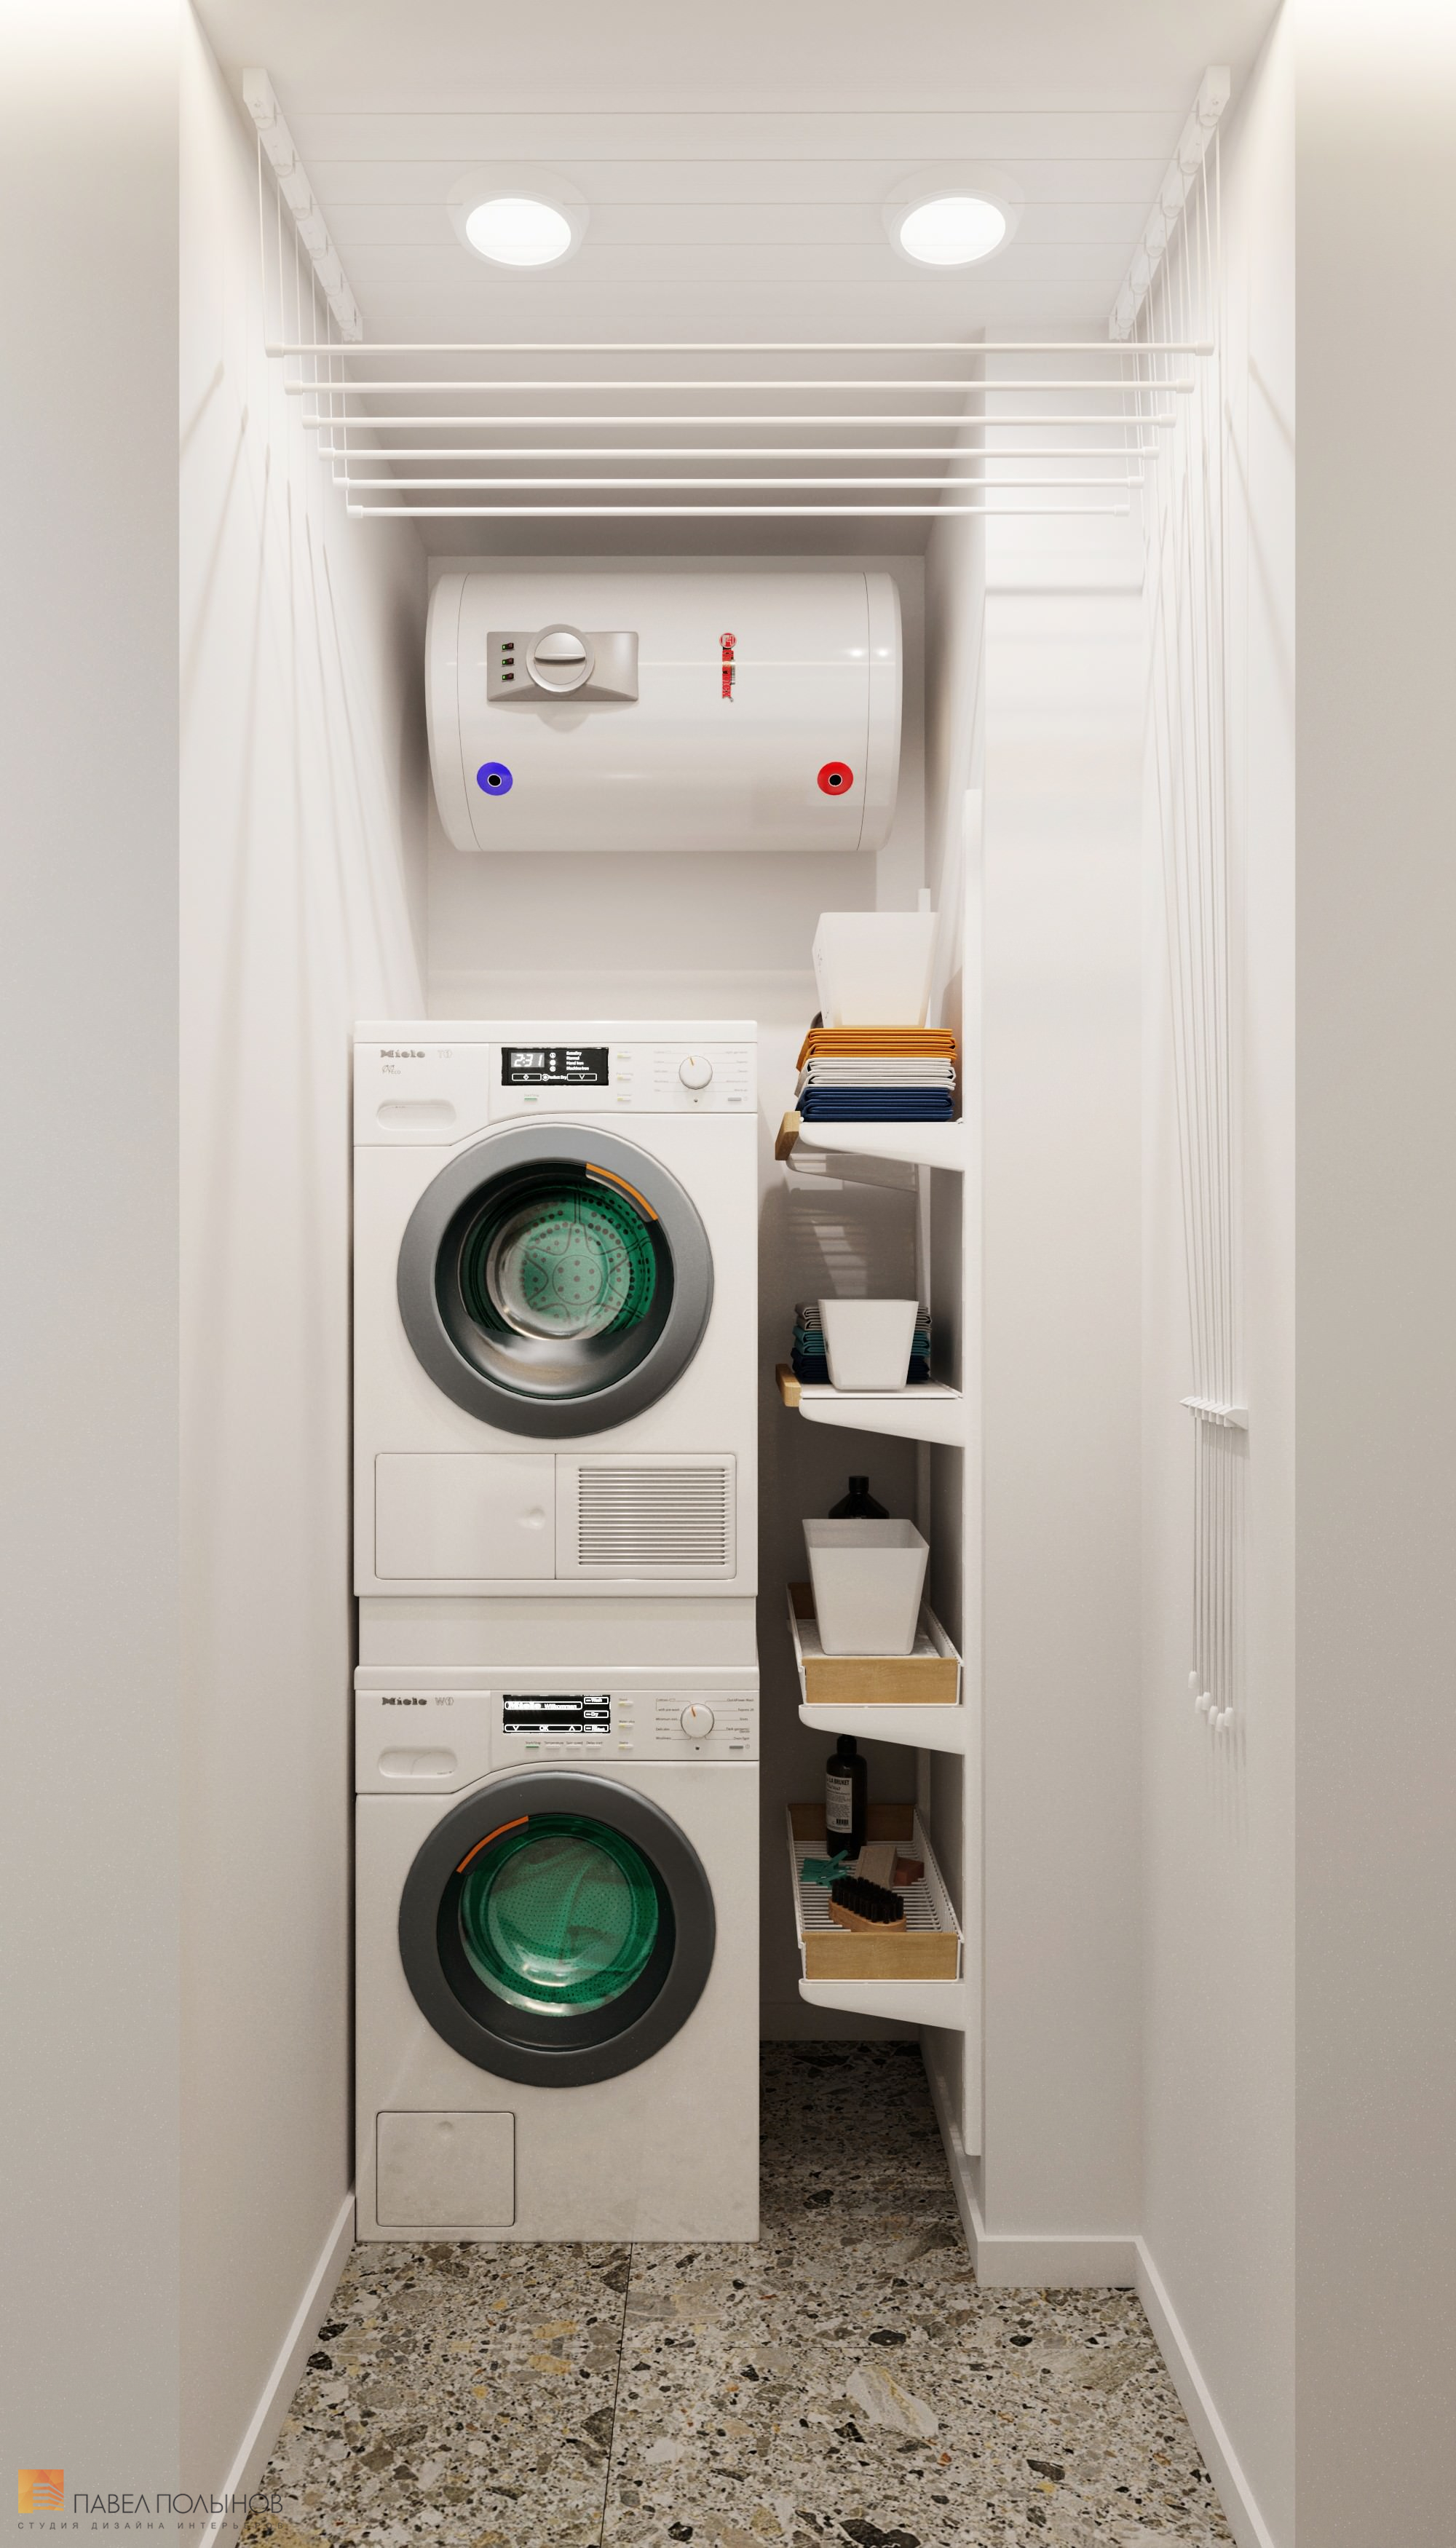 Фото хозяйственная комната из проекта «Дизайн интерьера квартиры в ЖК «5 Звёзд», минимализм, 117 кв.м.»